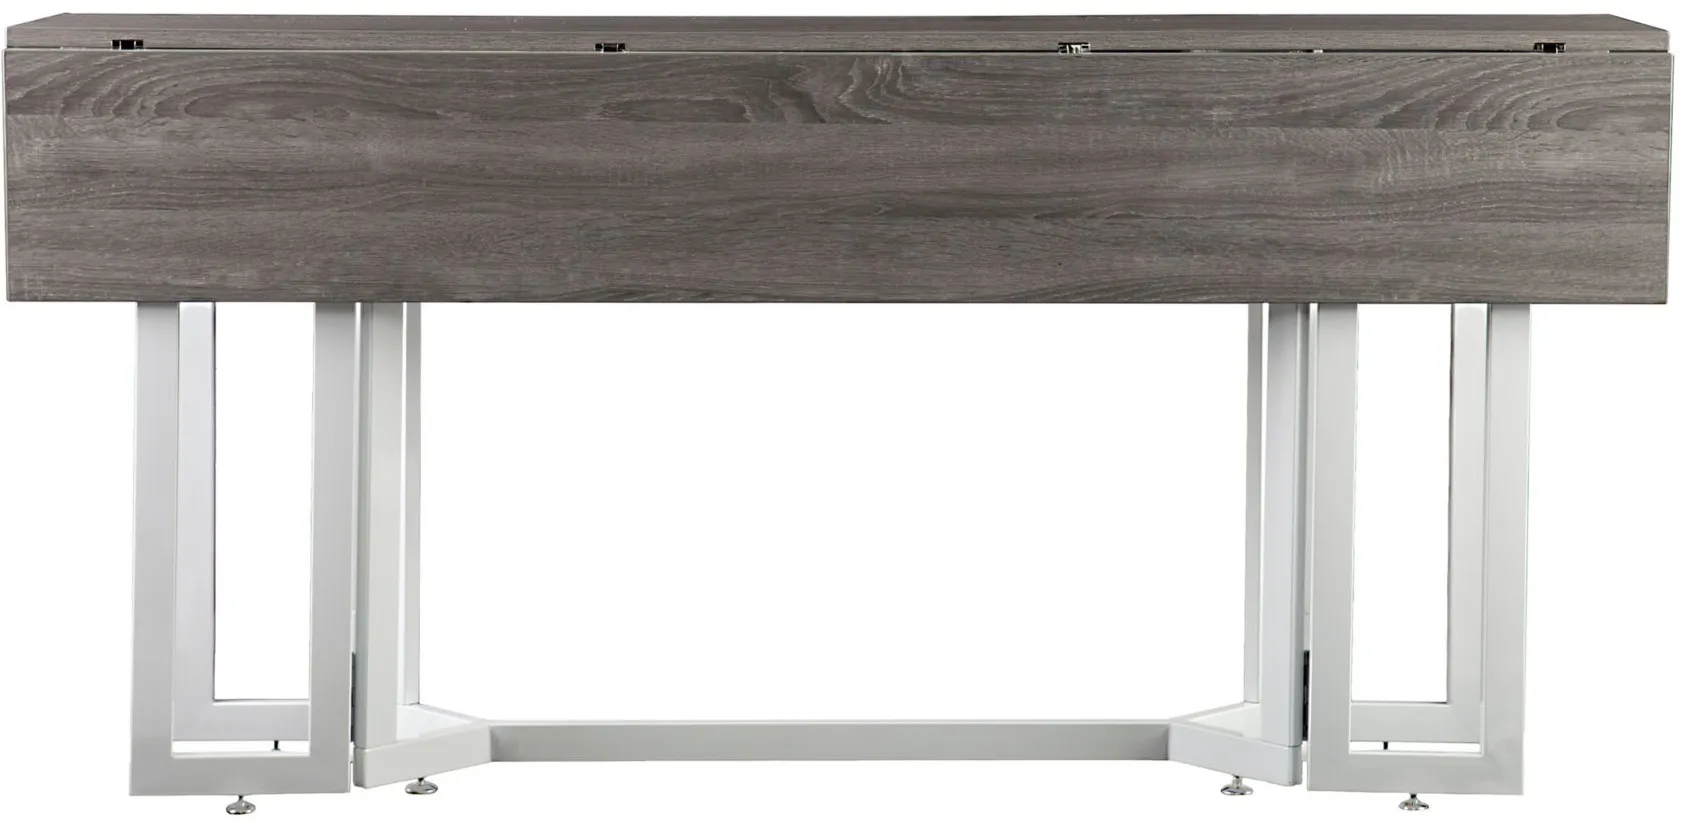 Plympton Drop Leaf Table in Gray by SEI Furniture